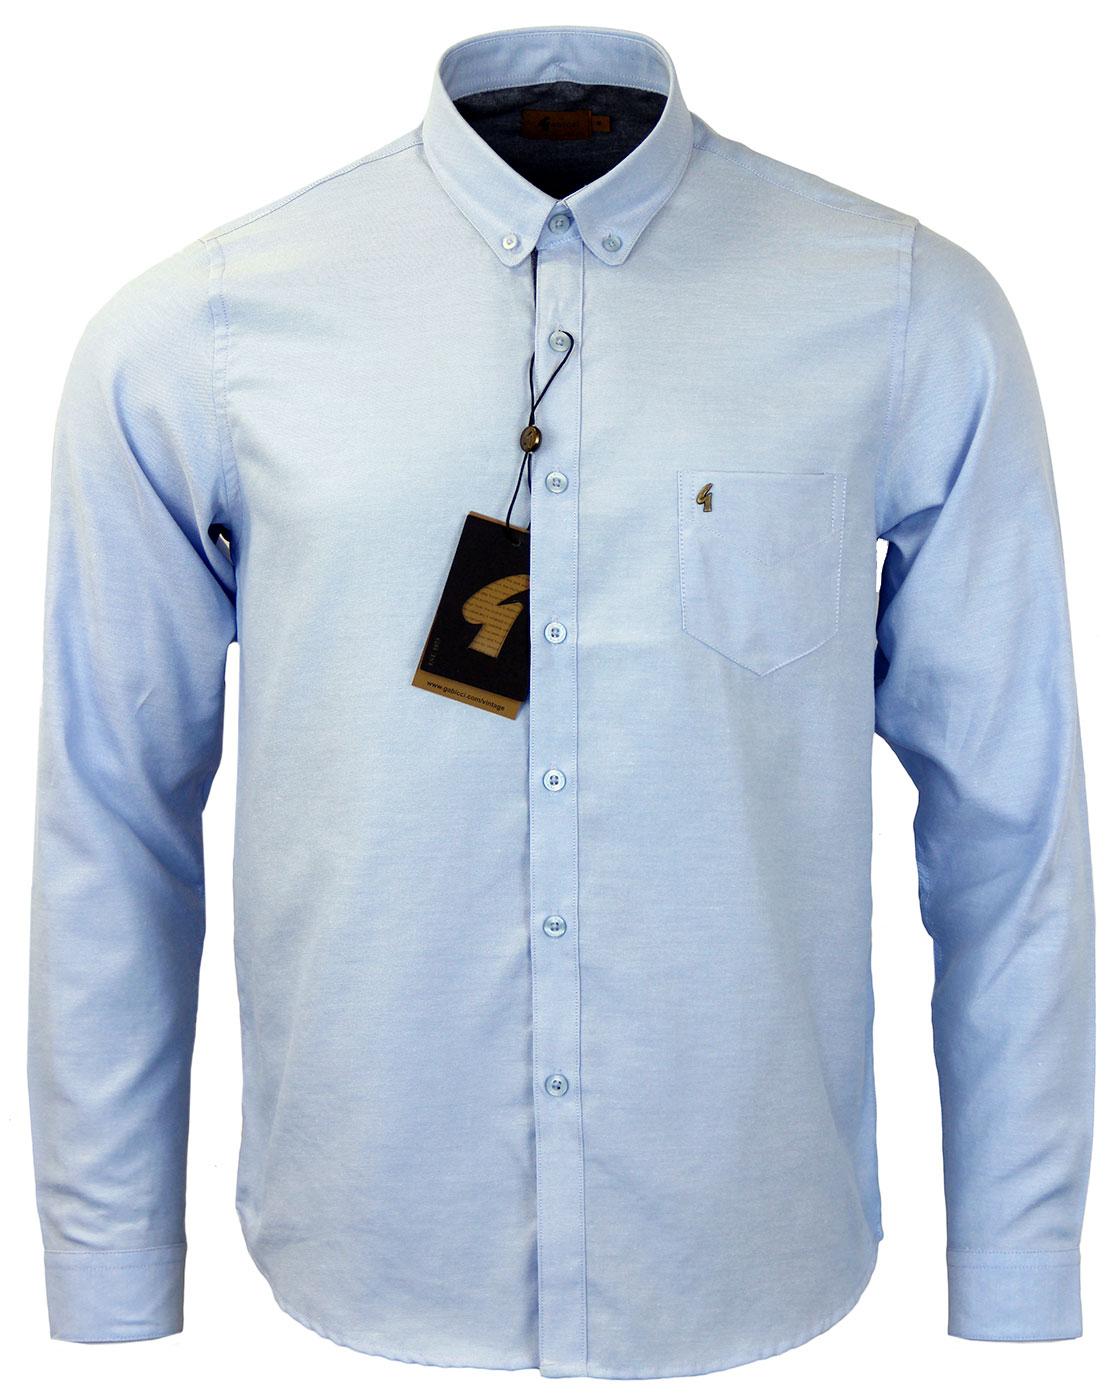 GABICCI VINTAGE Mod Rounded Collar Oxford Shirt SB